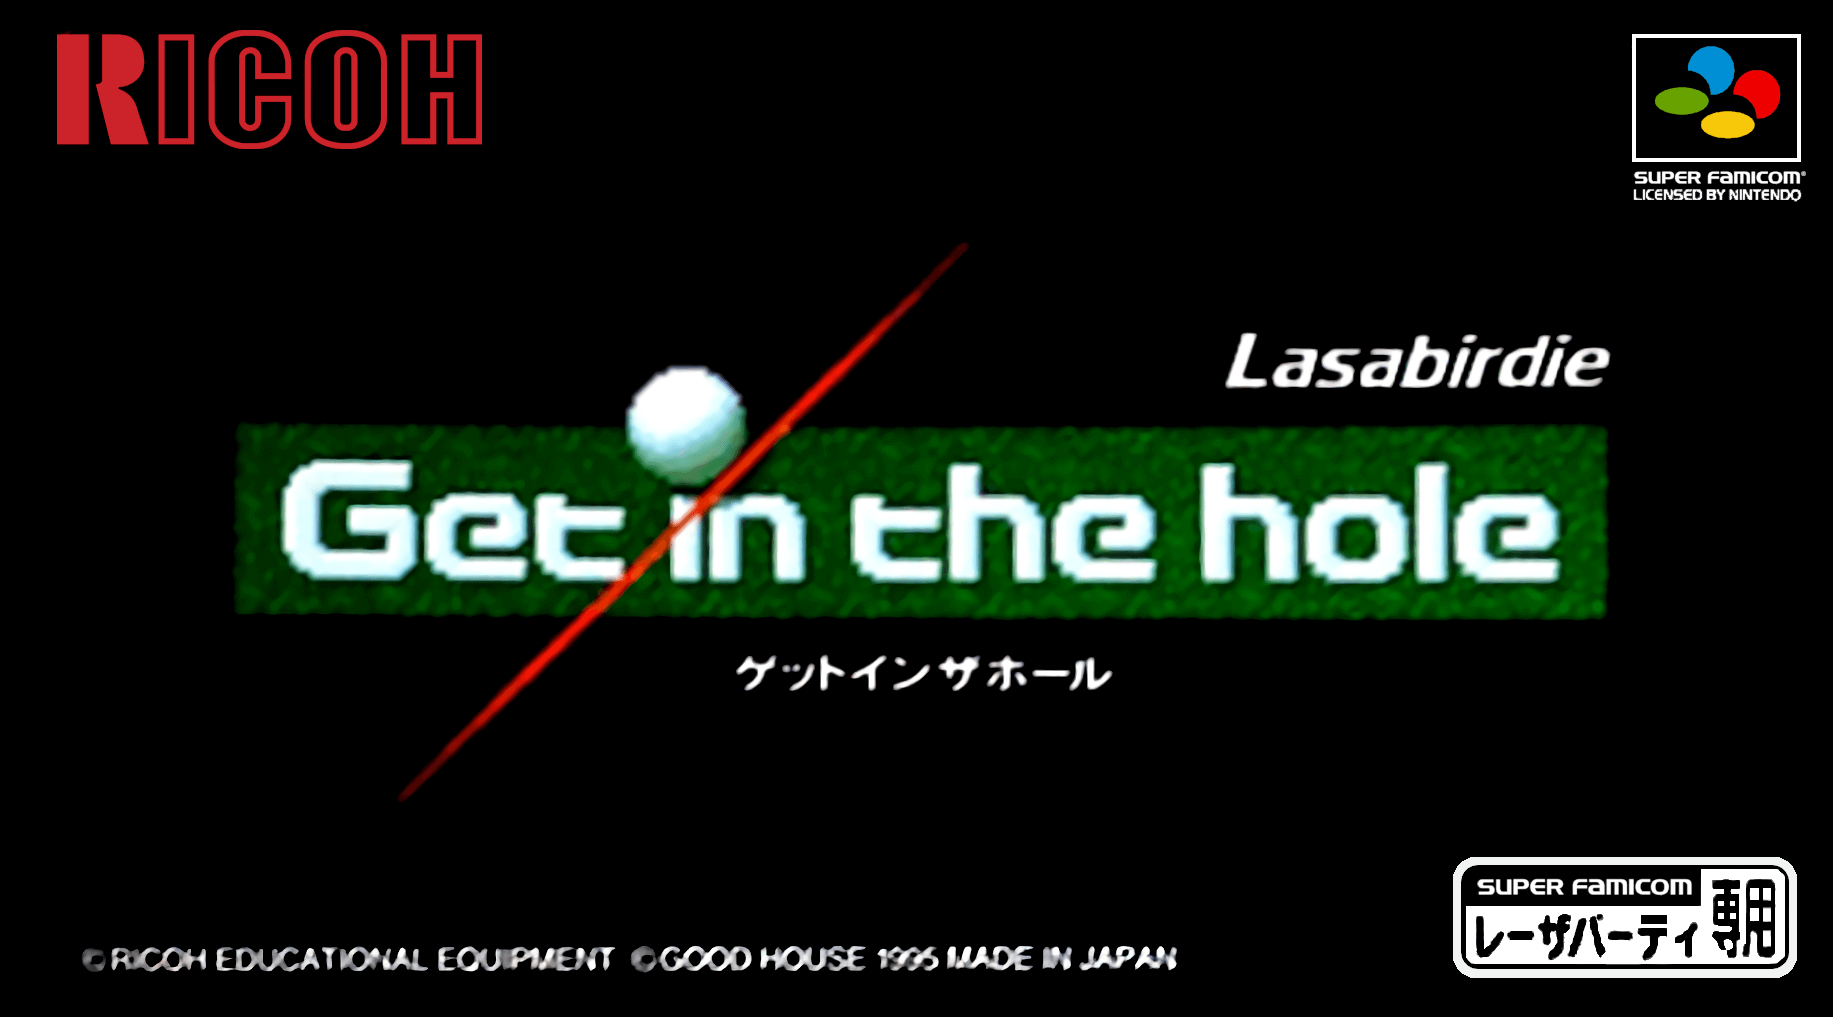 Lasabirdie Personal Golf Simulator Get In The Hole